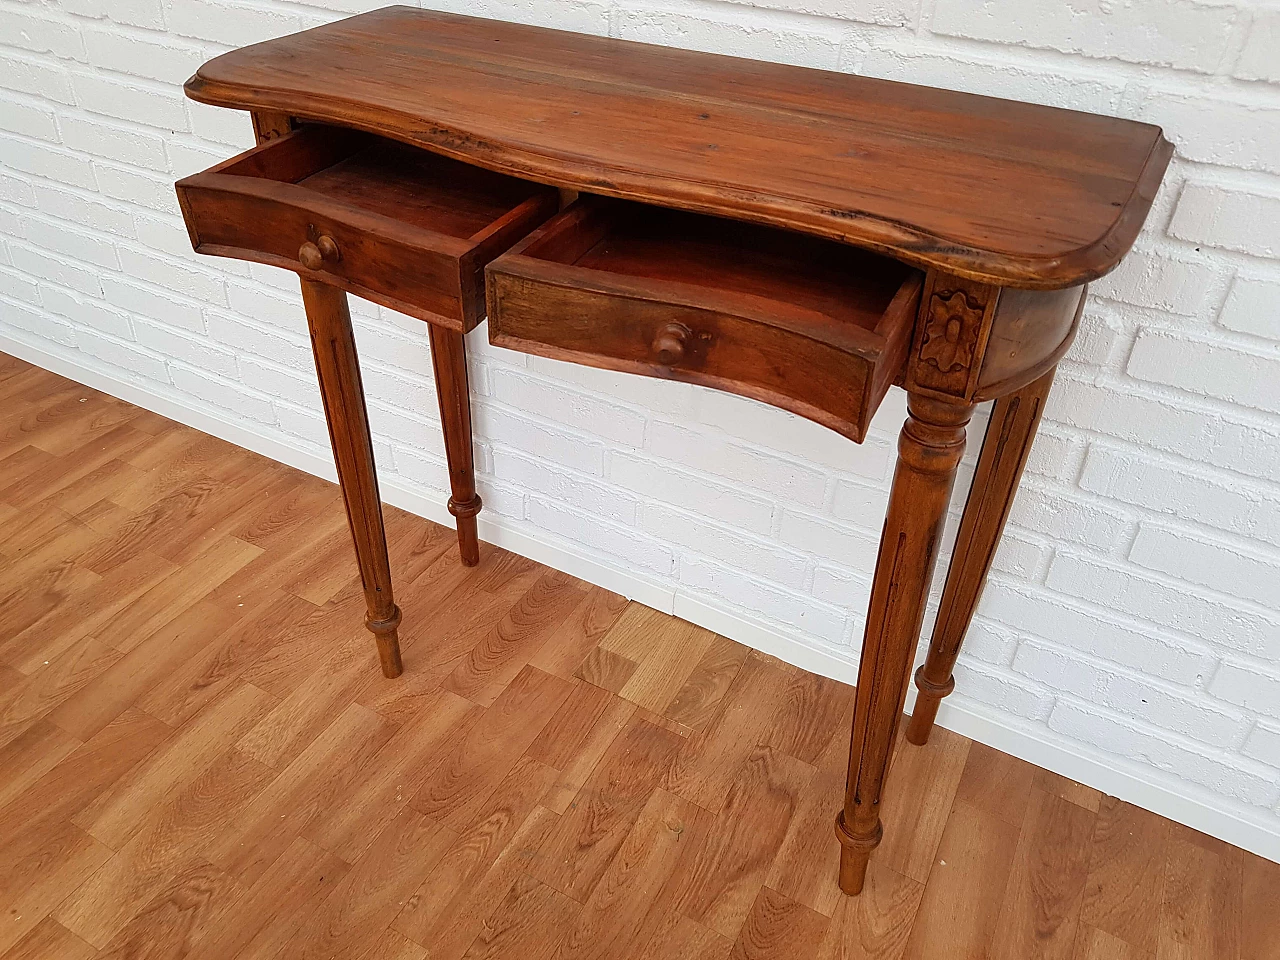 Side table, danish design, 50s, teak wood, drawers 1064971